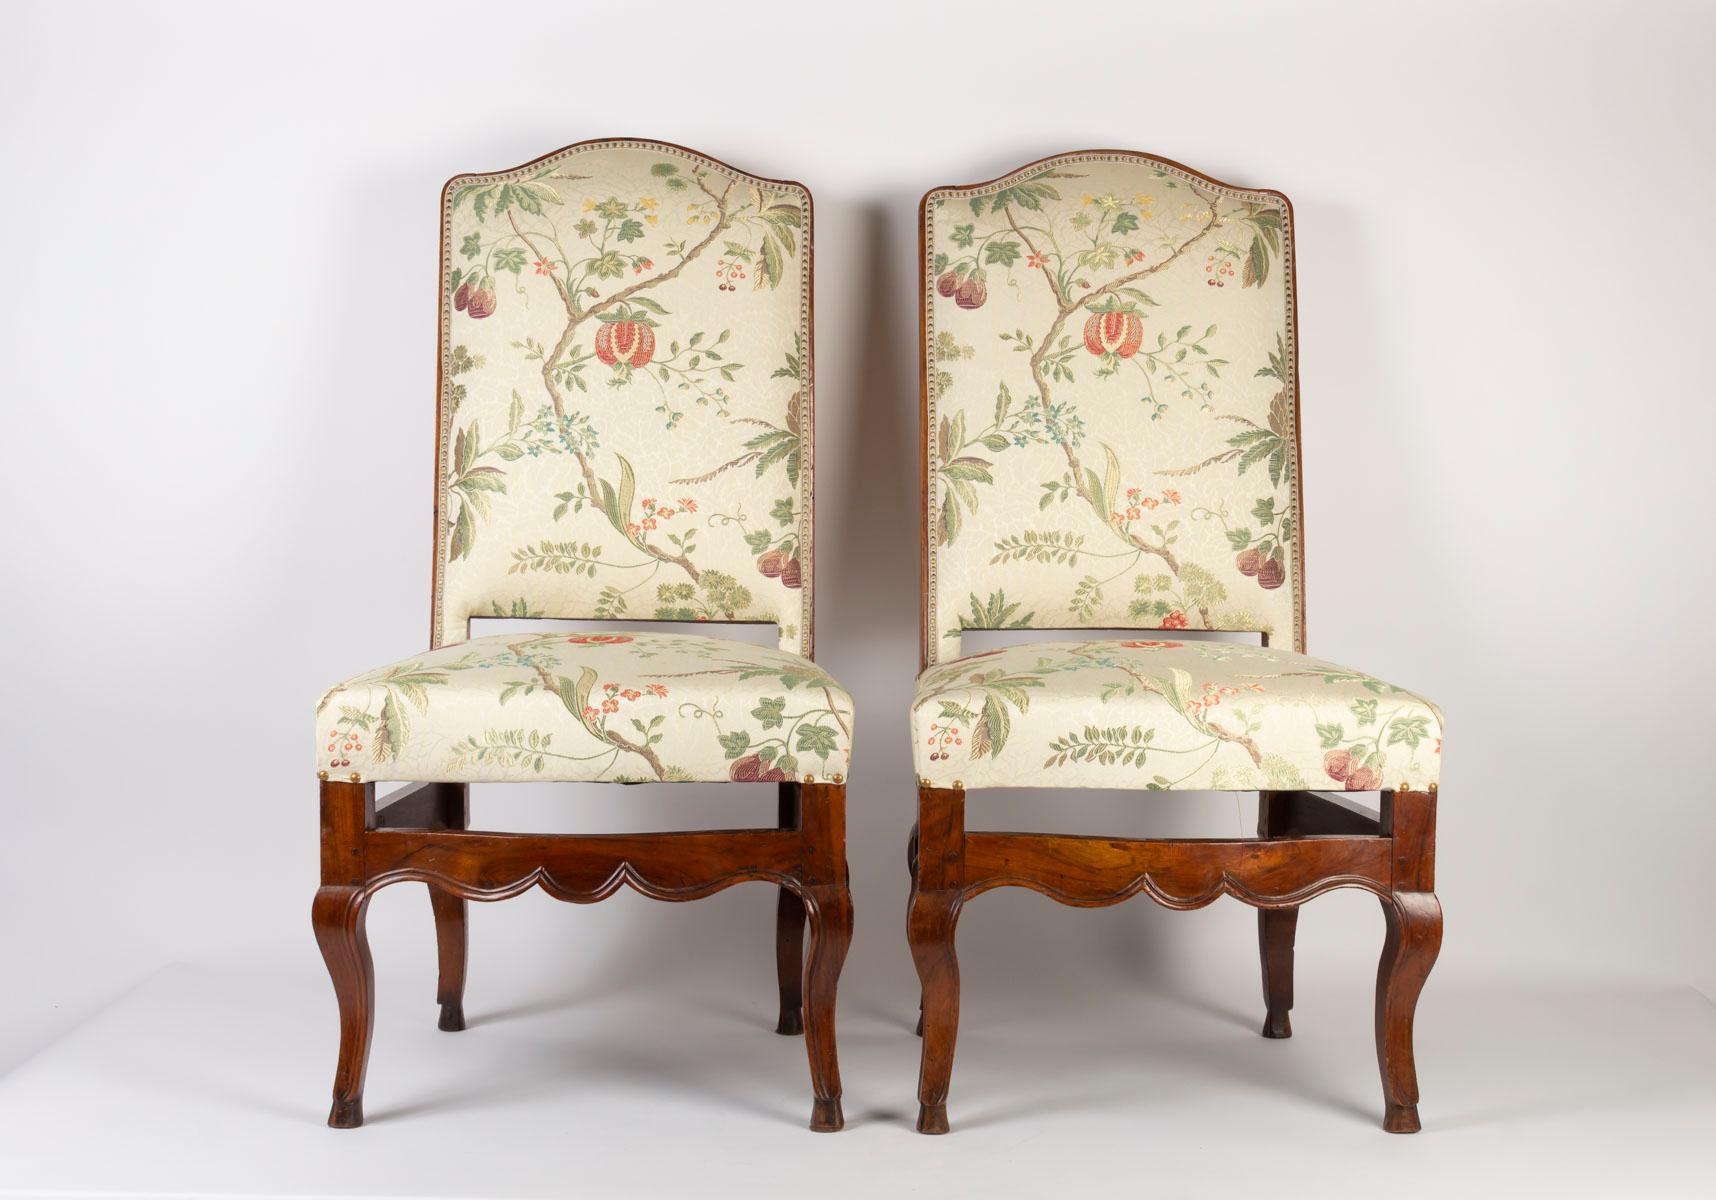 Pair of Provençal walnut chairs, 18th century, New Editor's Choice Fabric
Measures: H 107cm, W 55cm, D 50cm.